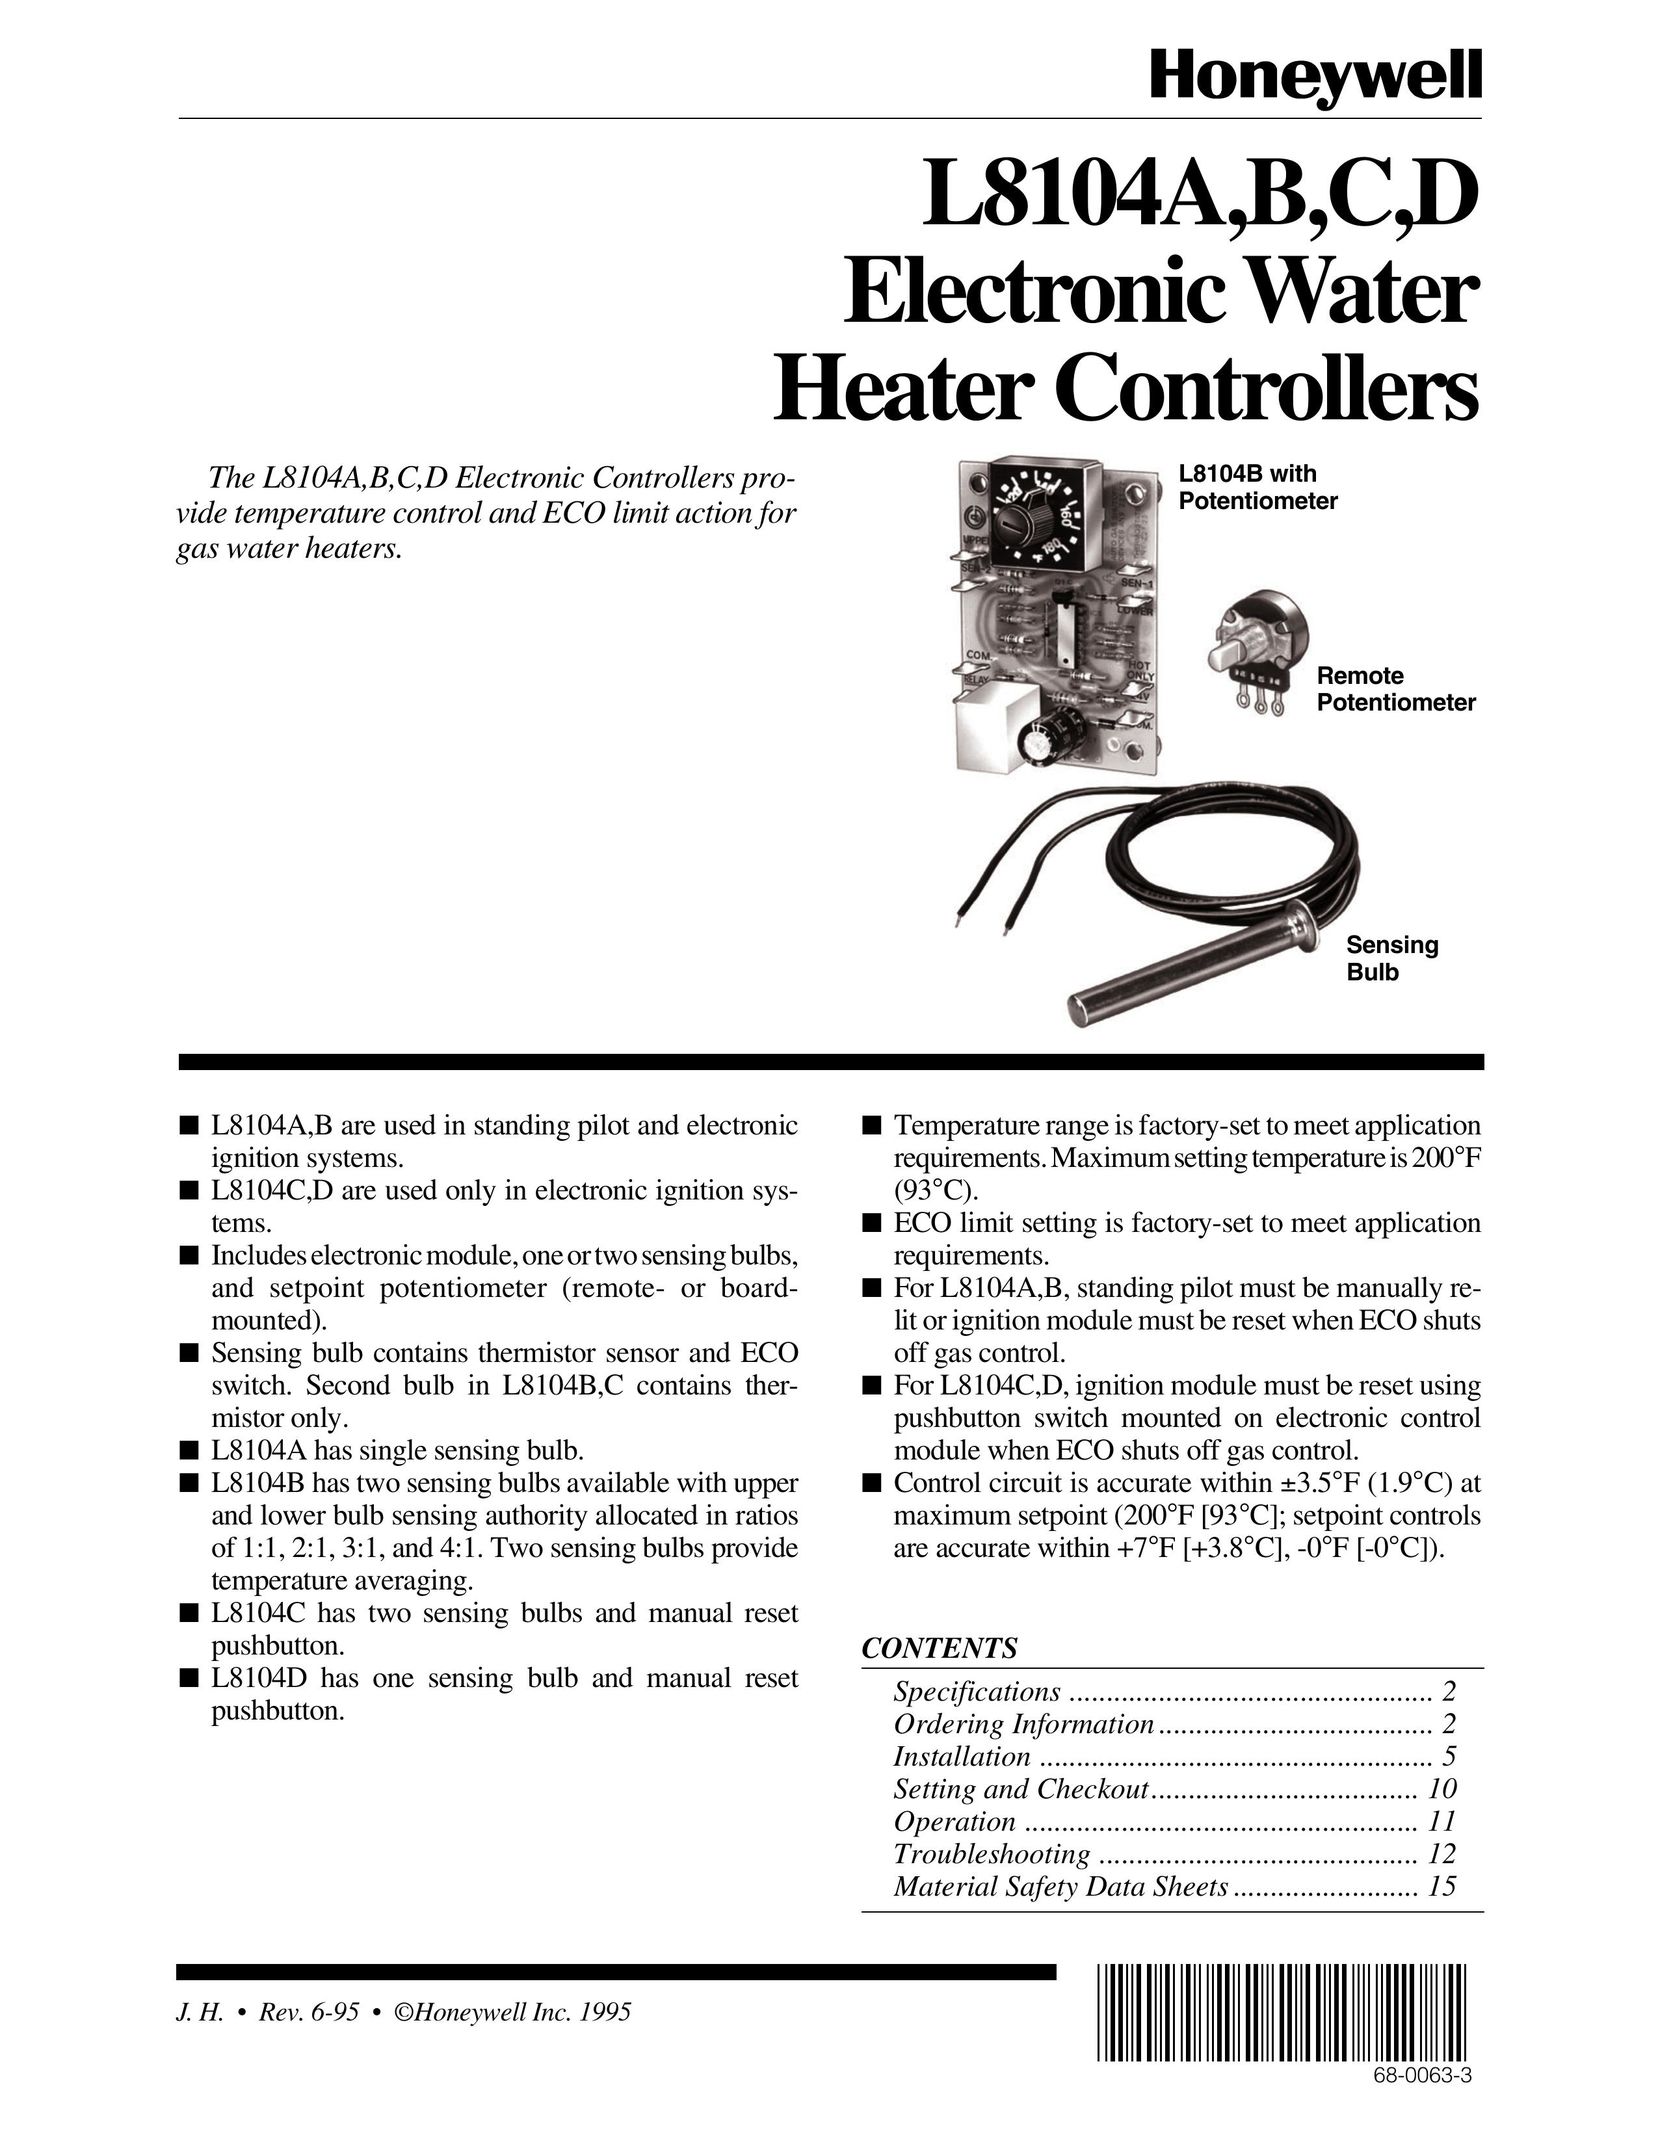 Honeywell L8104D Water Heater User Manual